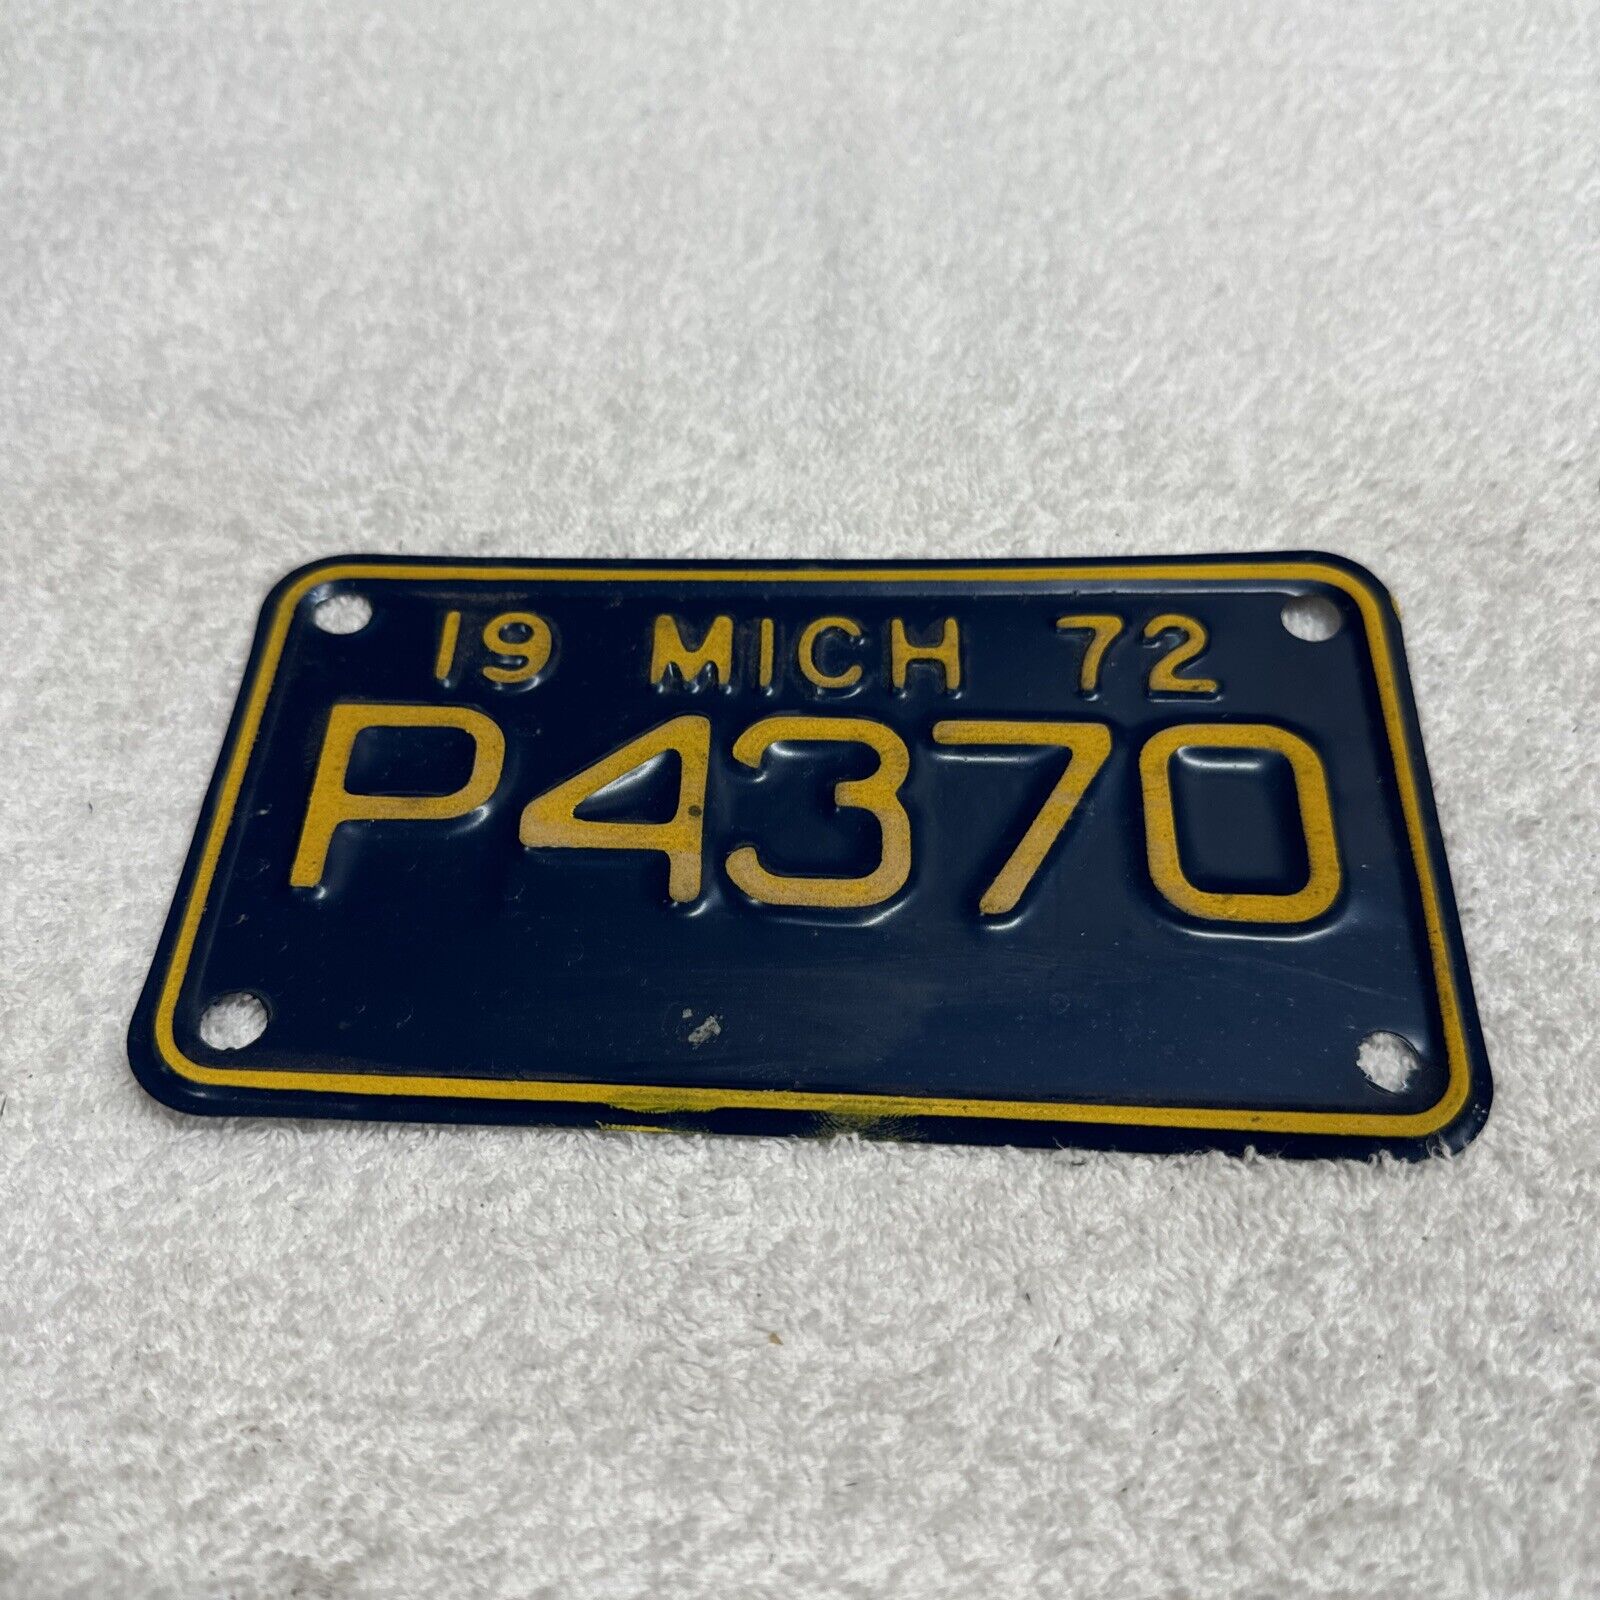 1972 Michigan Motorcycle License Plate P 4370